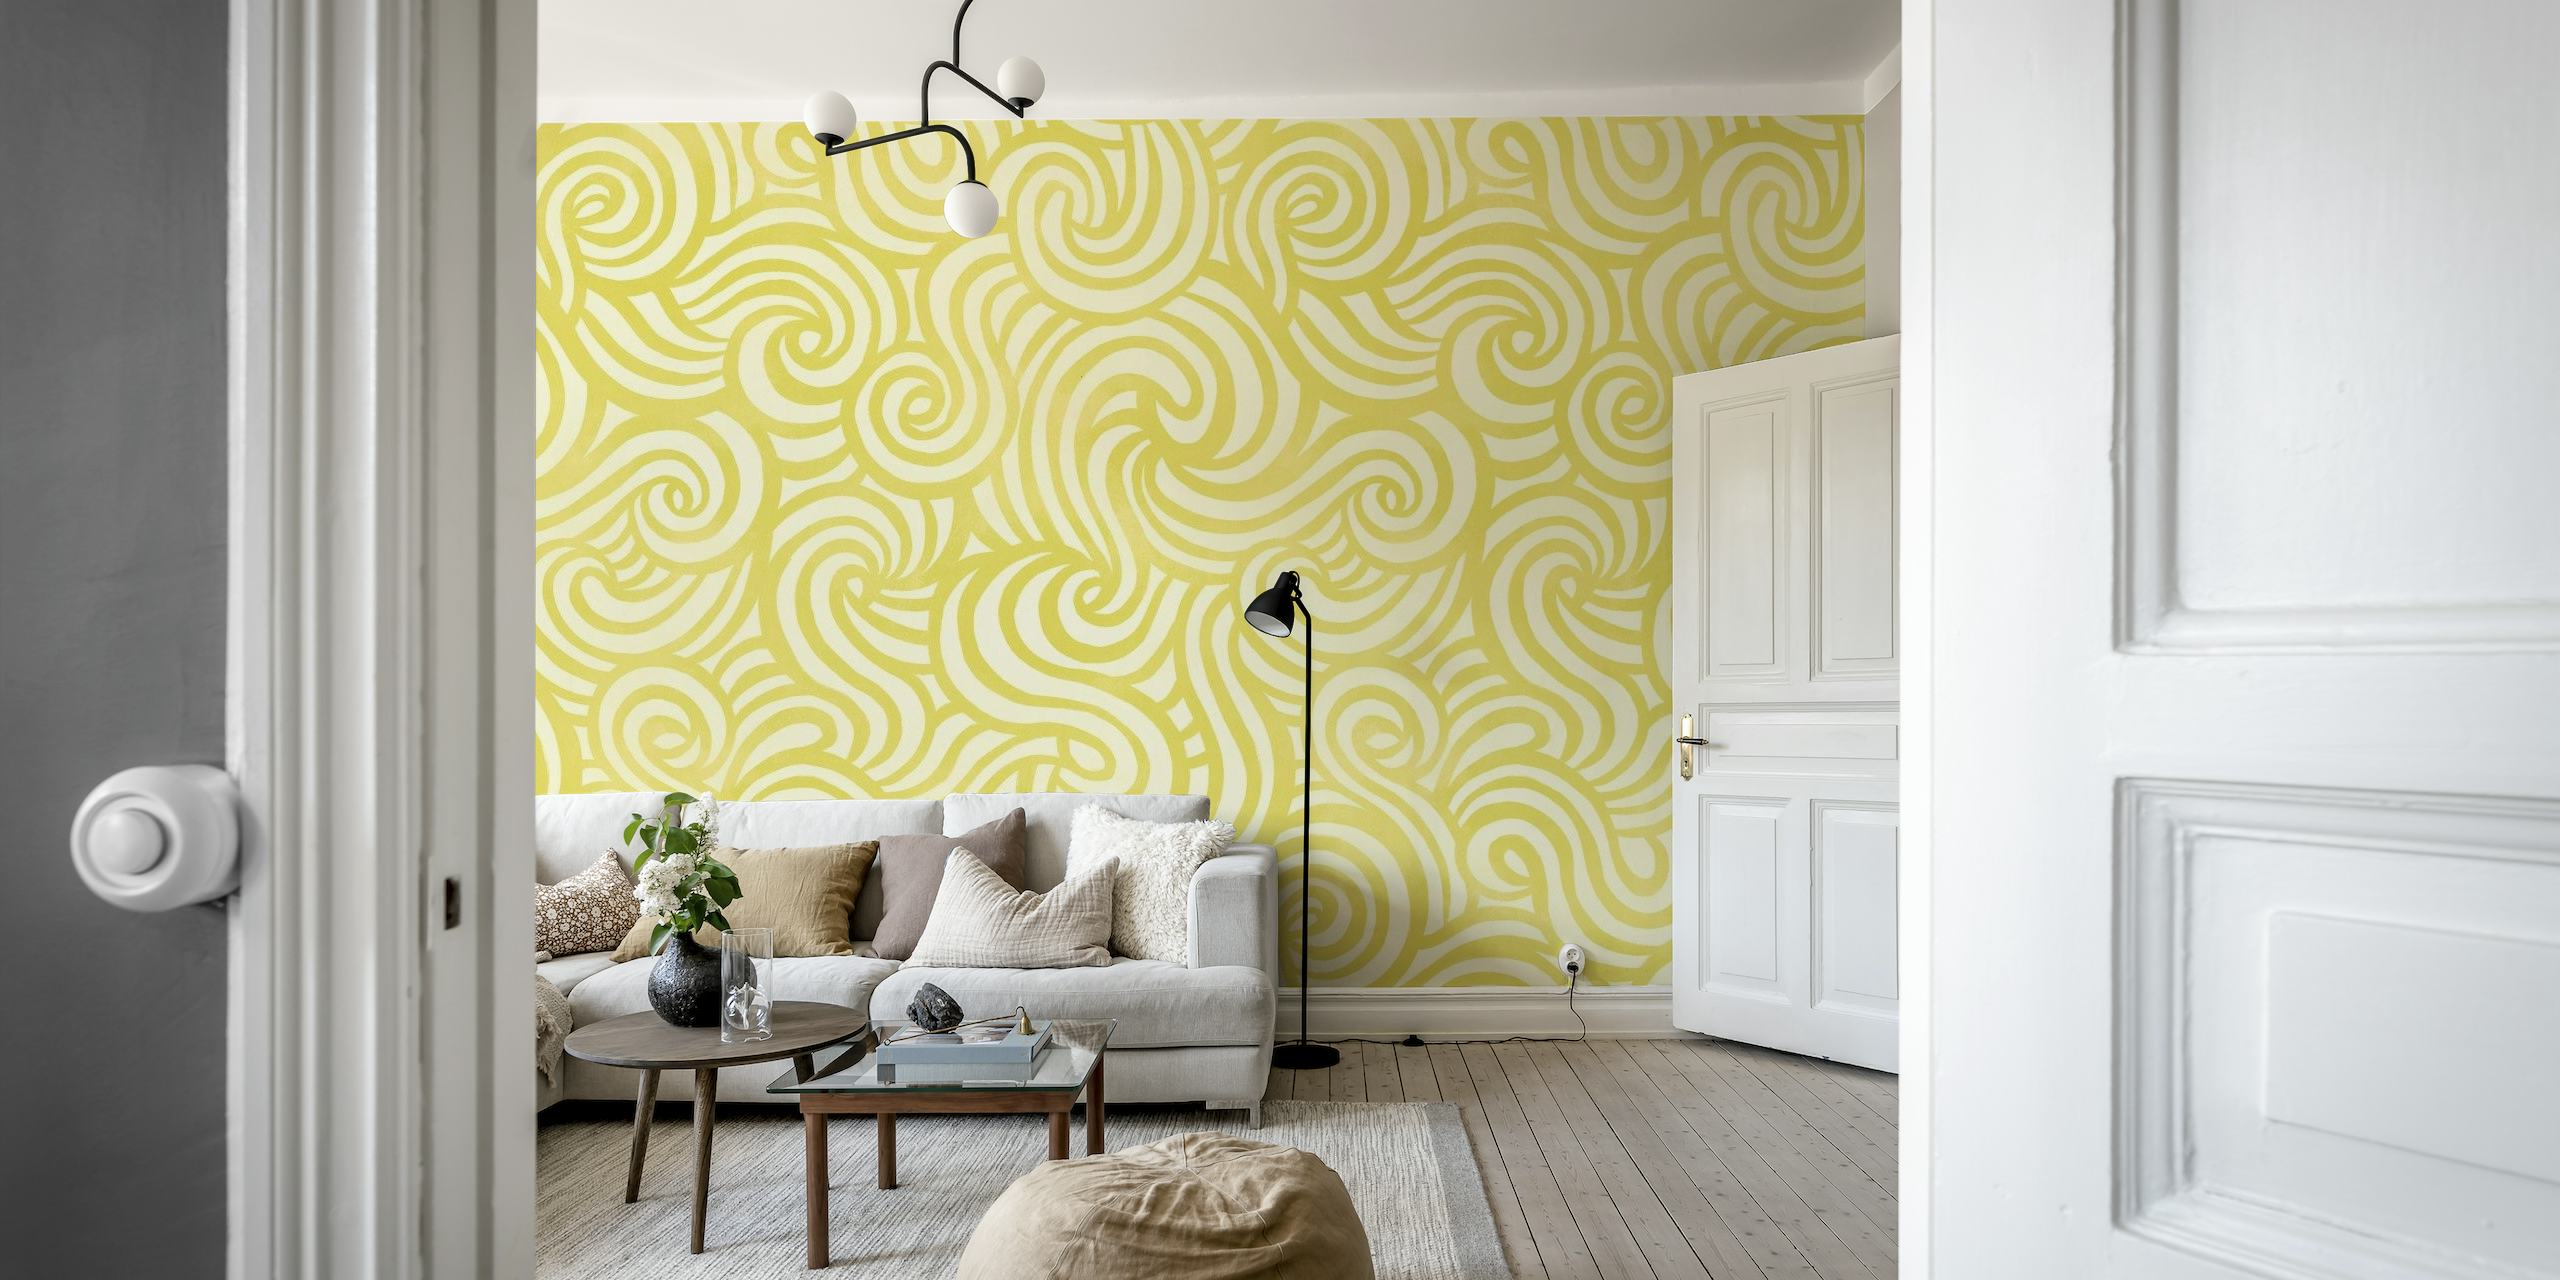 Epic Swirl wallpaper